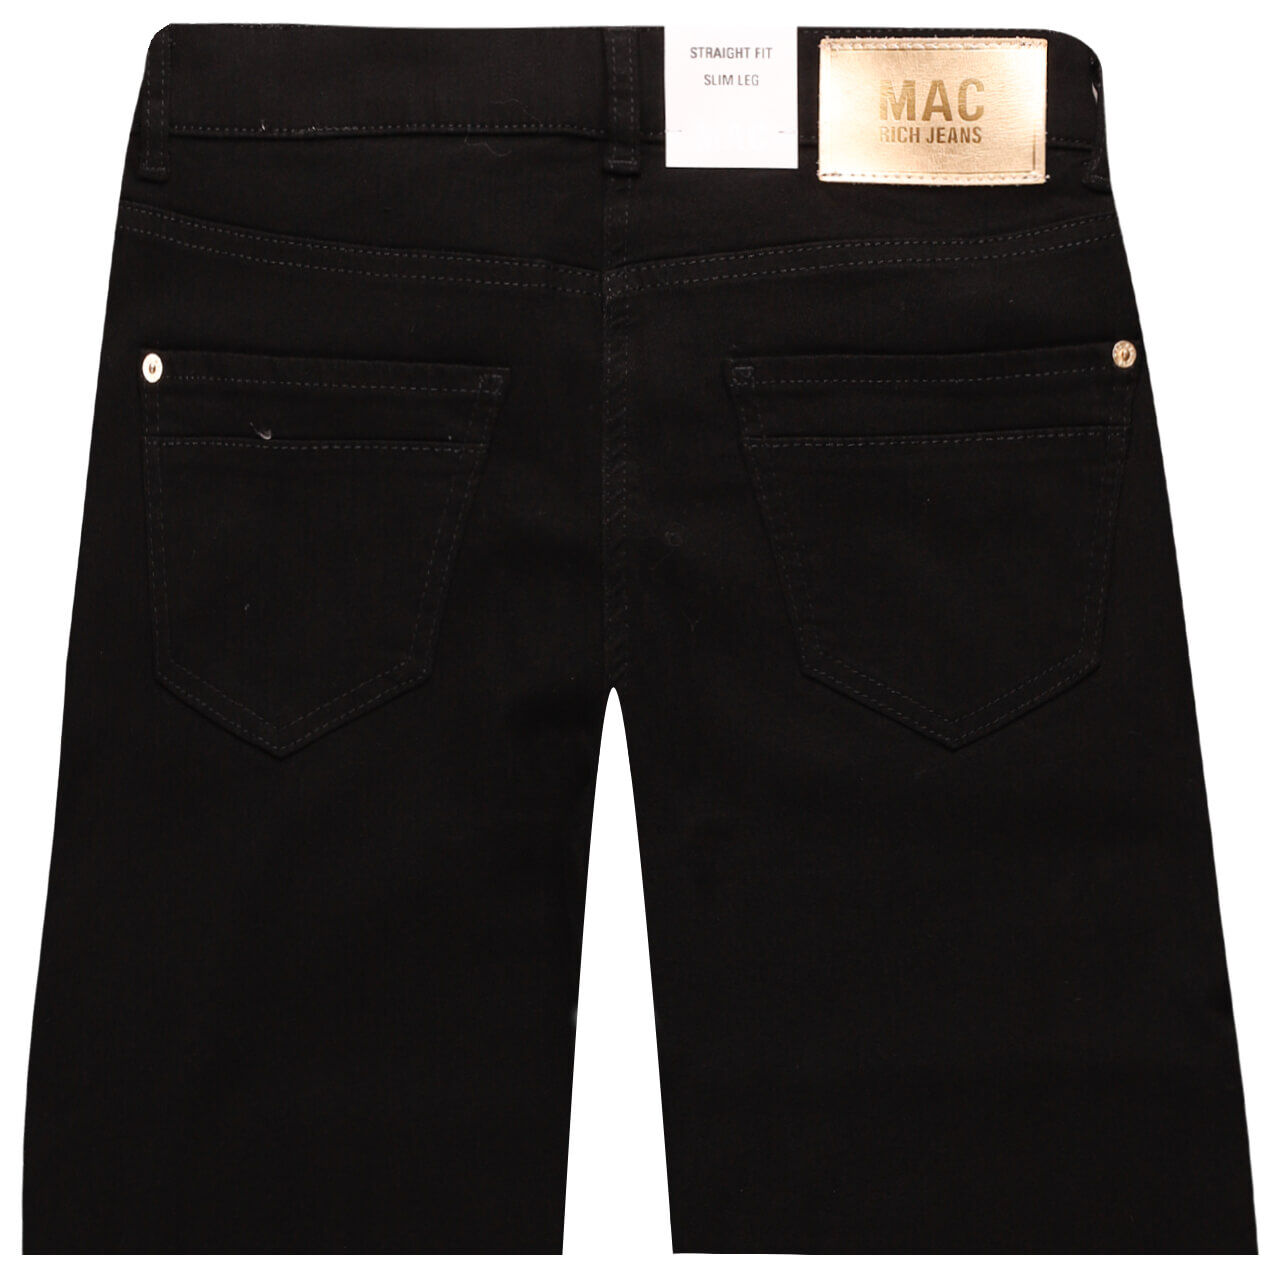 MAC Rich Slim Jeans deep black